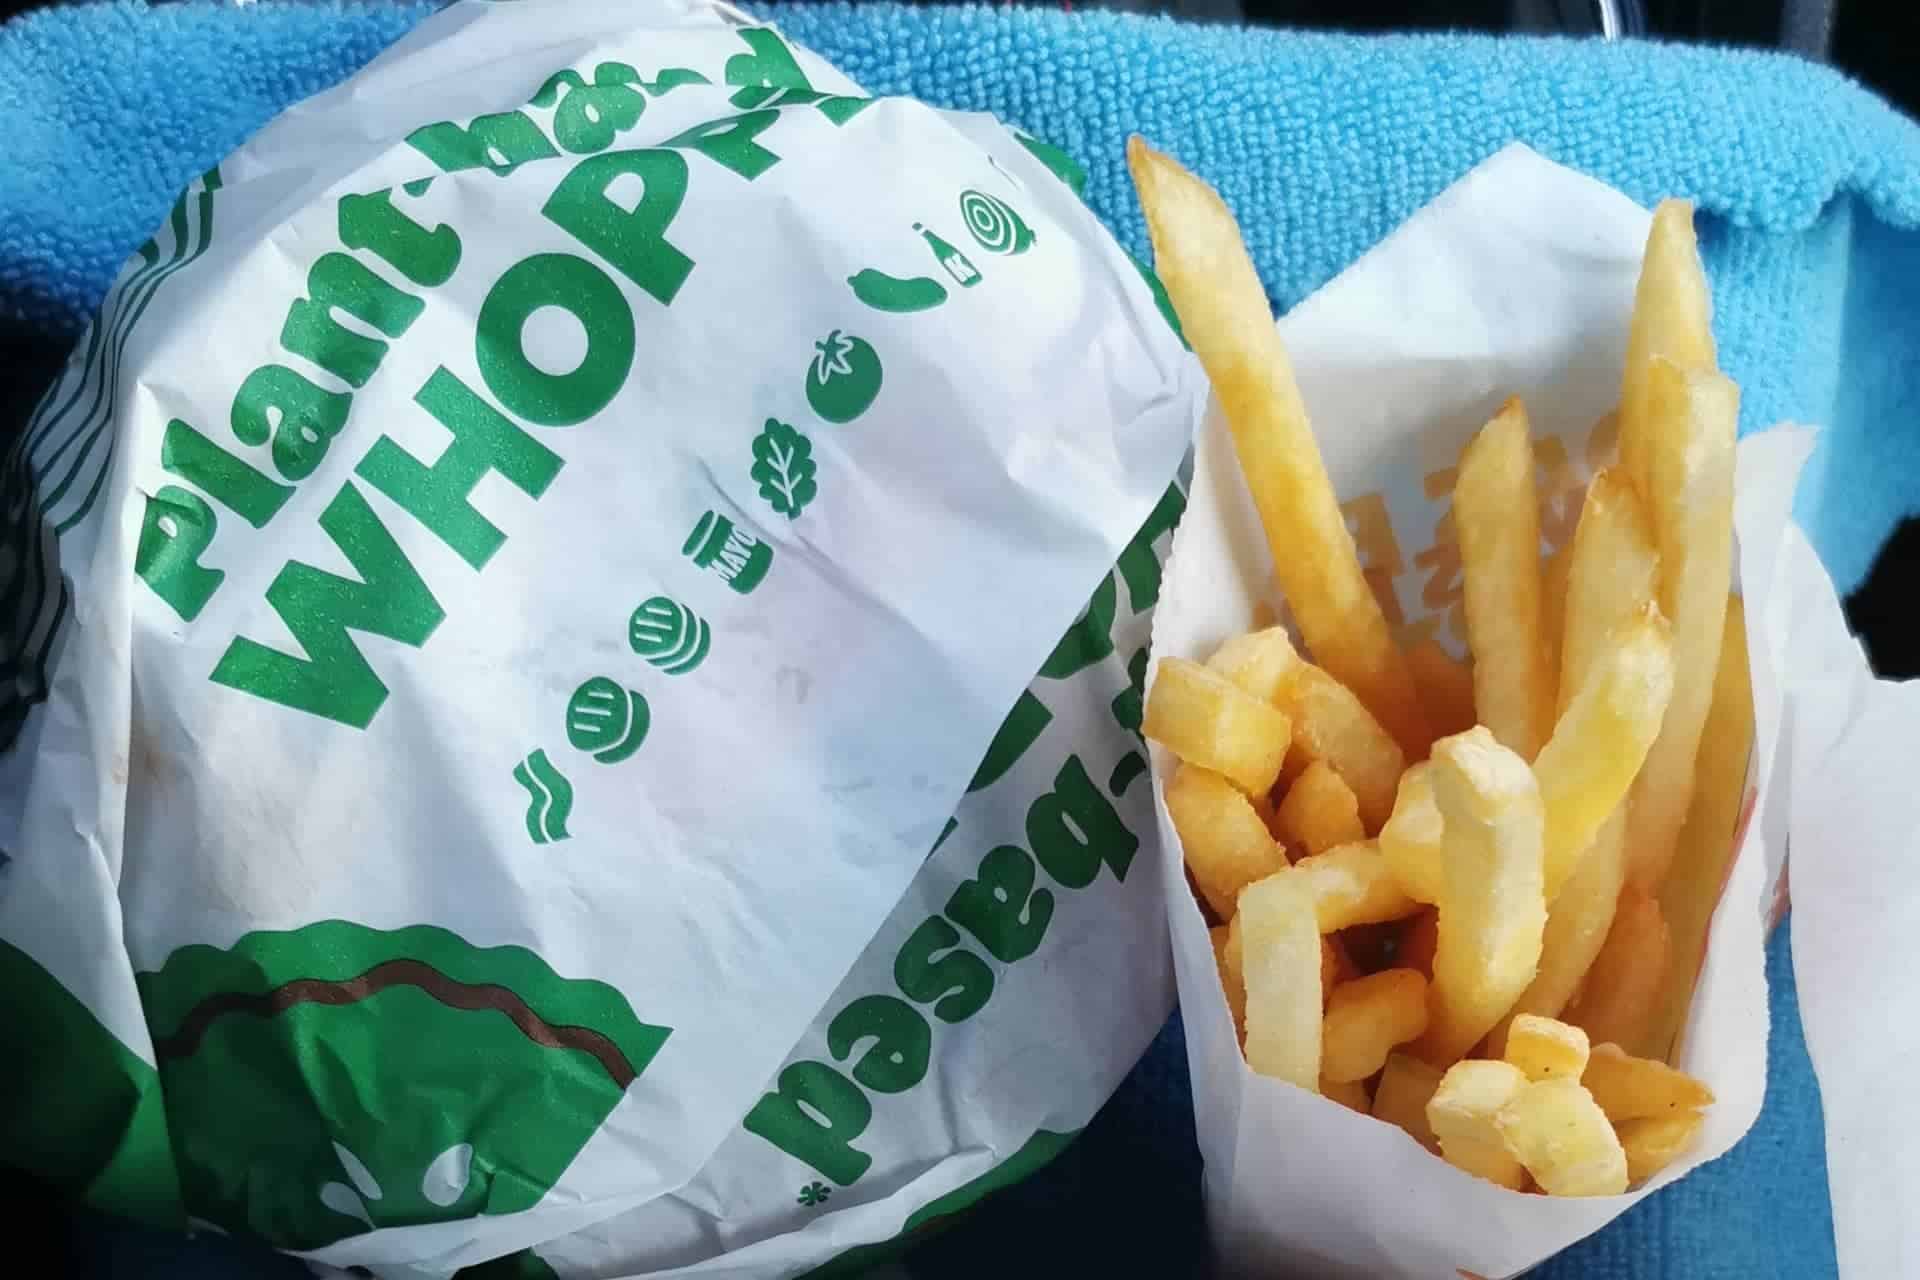 Burger King: Plant-based Whopper